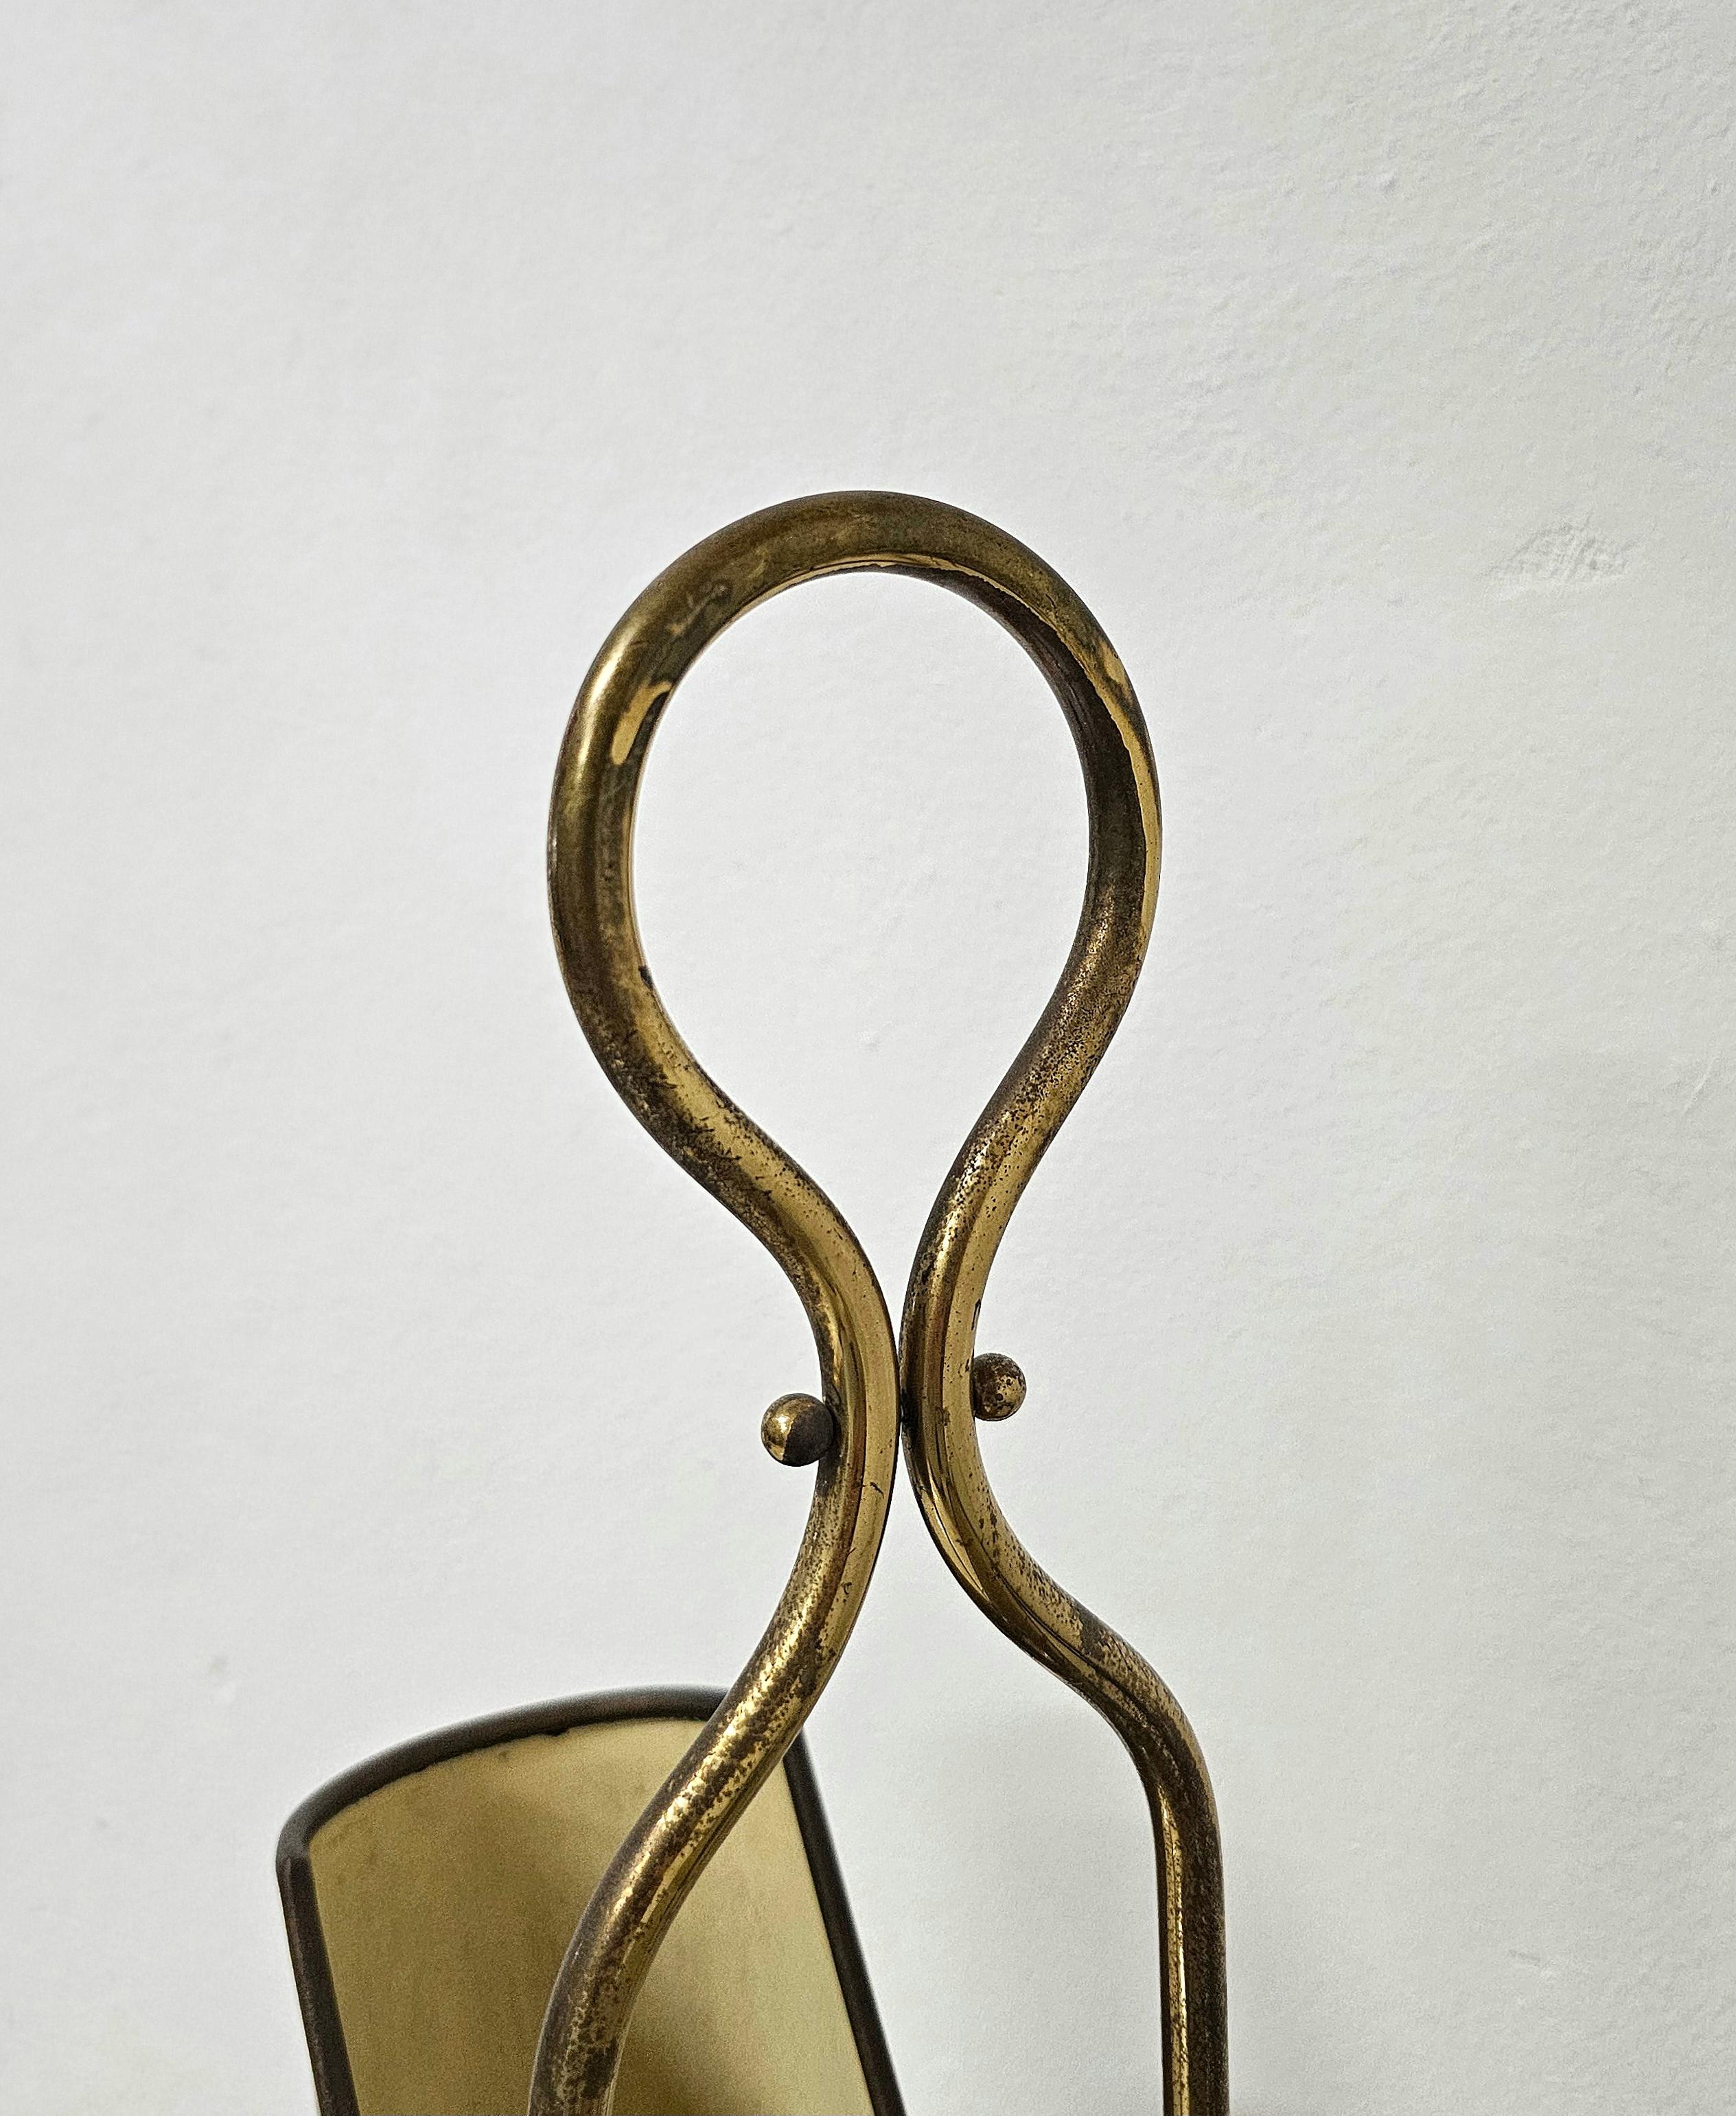 20th Century Umbrella Stand Brass Metal Midcentury Modern Italian Design 1950s For Sale